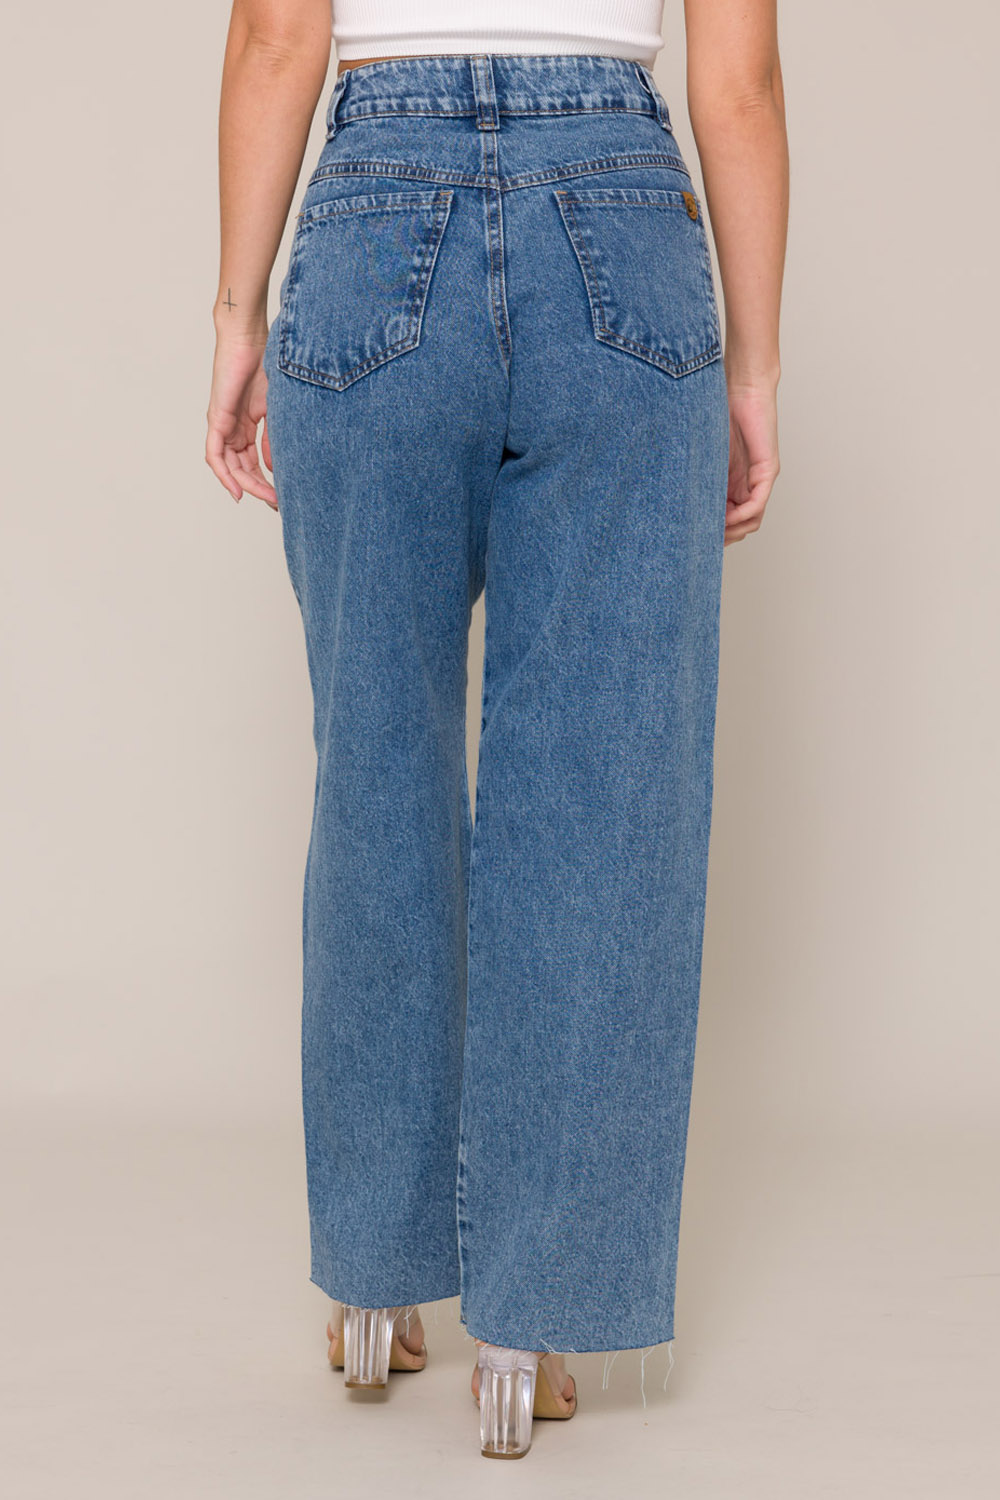 Calça Jeans Cropped Reta Basic 11599 - Jeans Médio